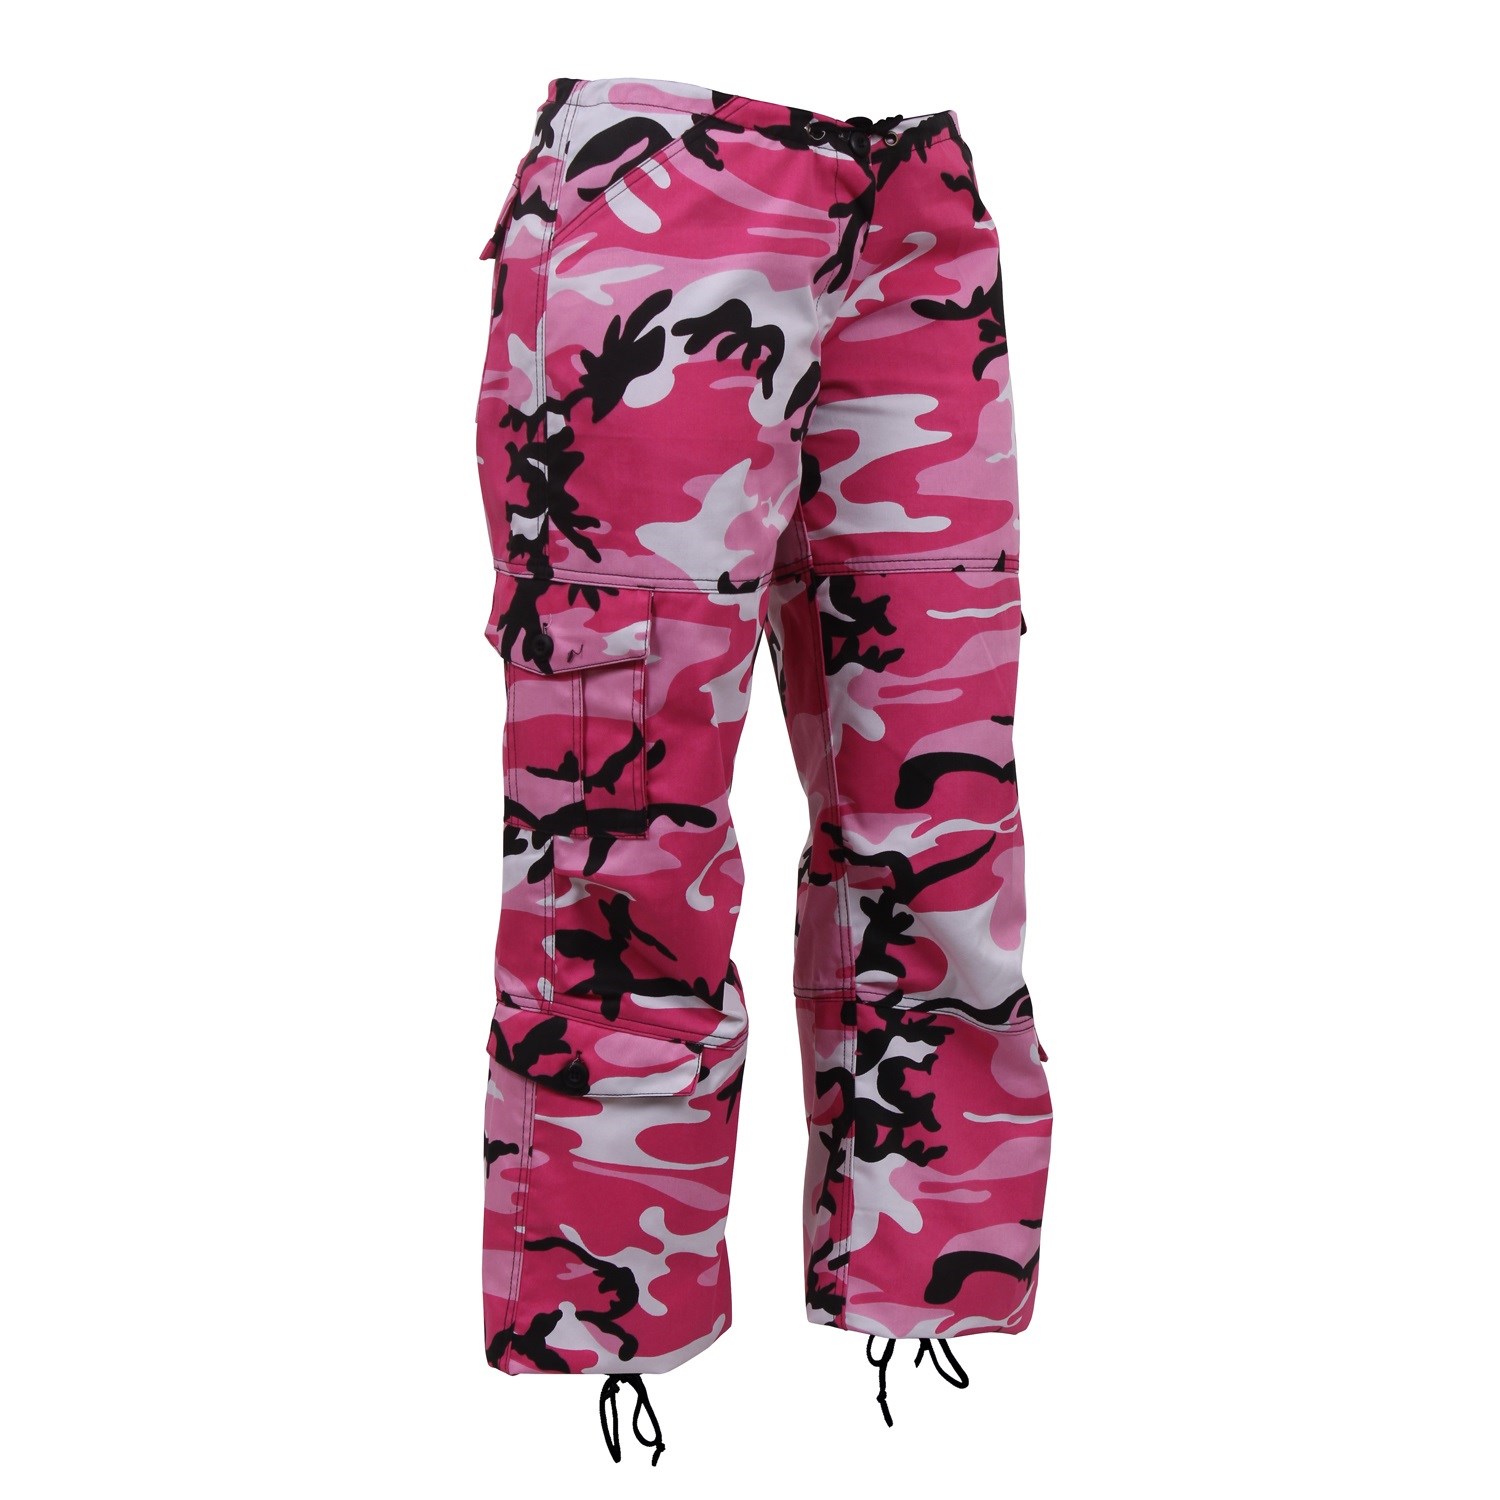 pants women ROTHCO - Paratrooper - Subdued Urban Digital - 3991 